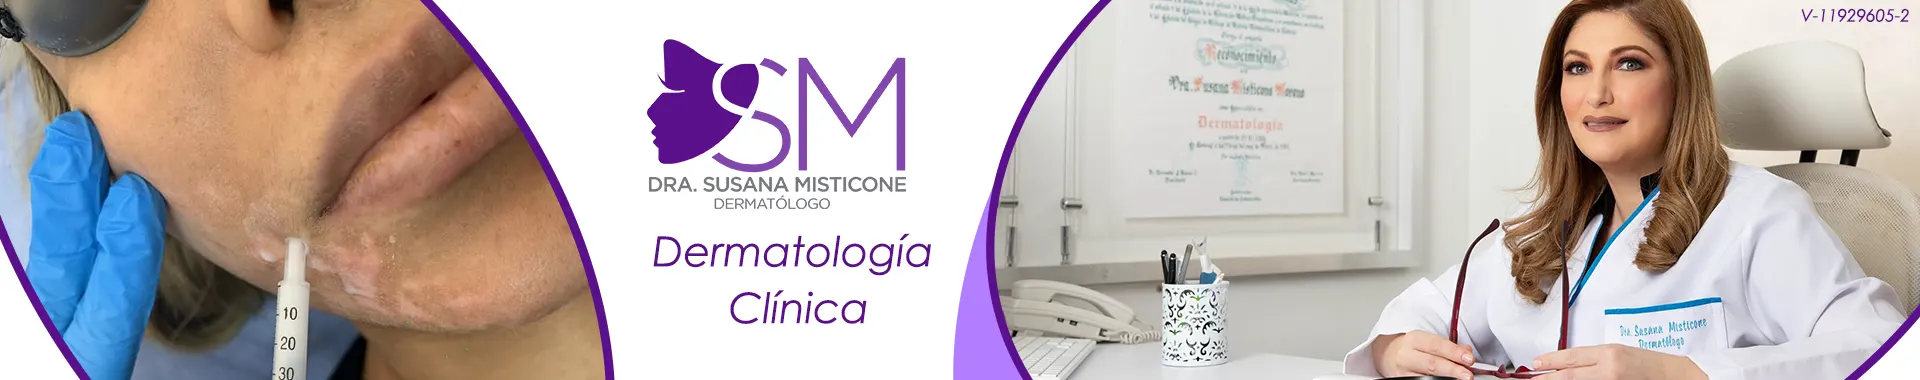 Imagen 2 del perfil de Dra. Susana Misticone